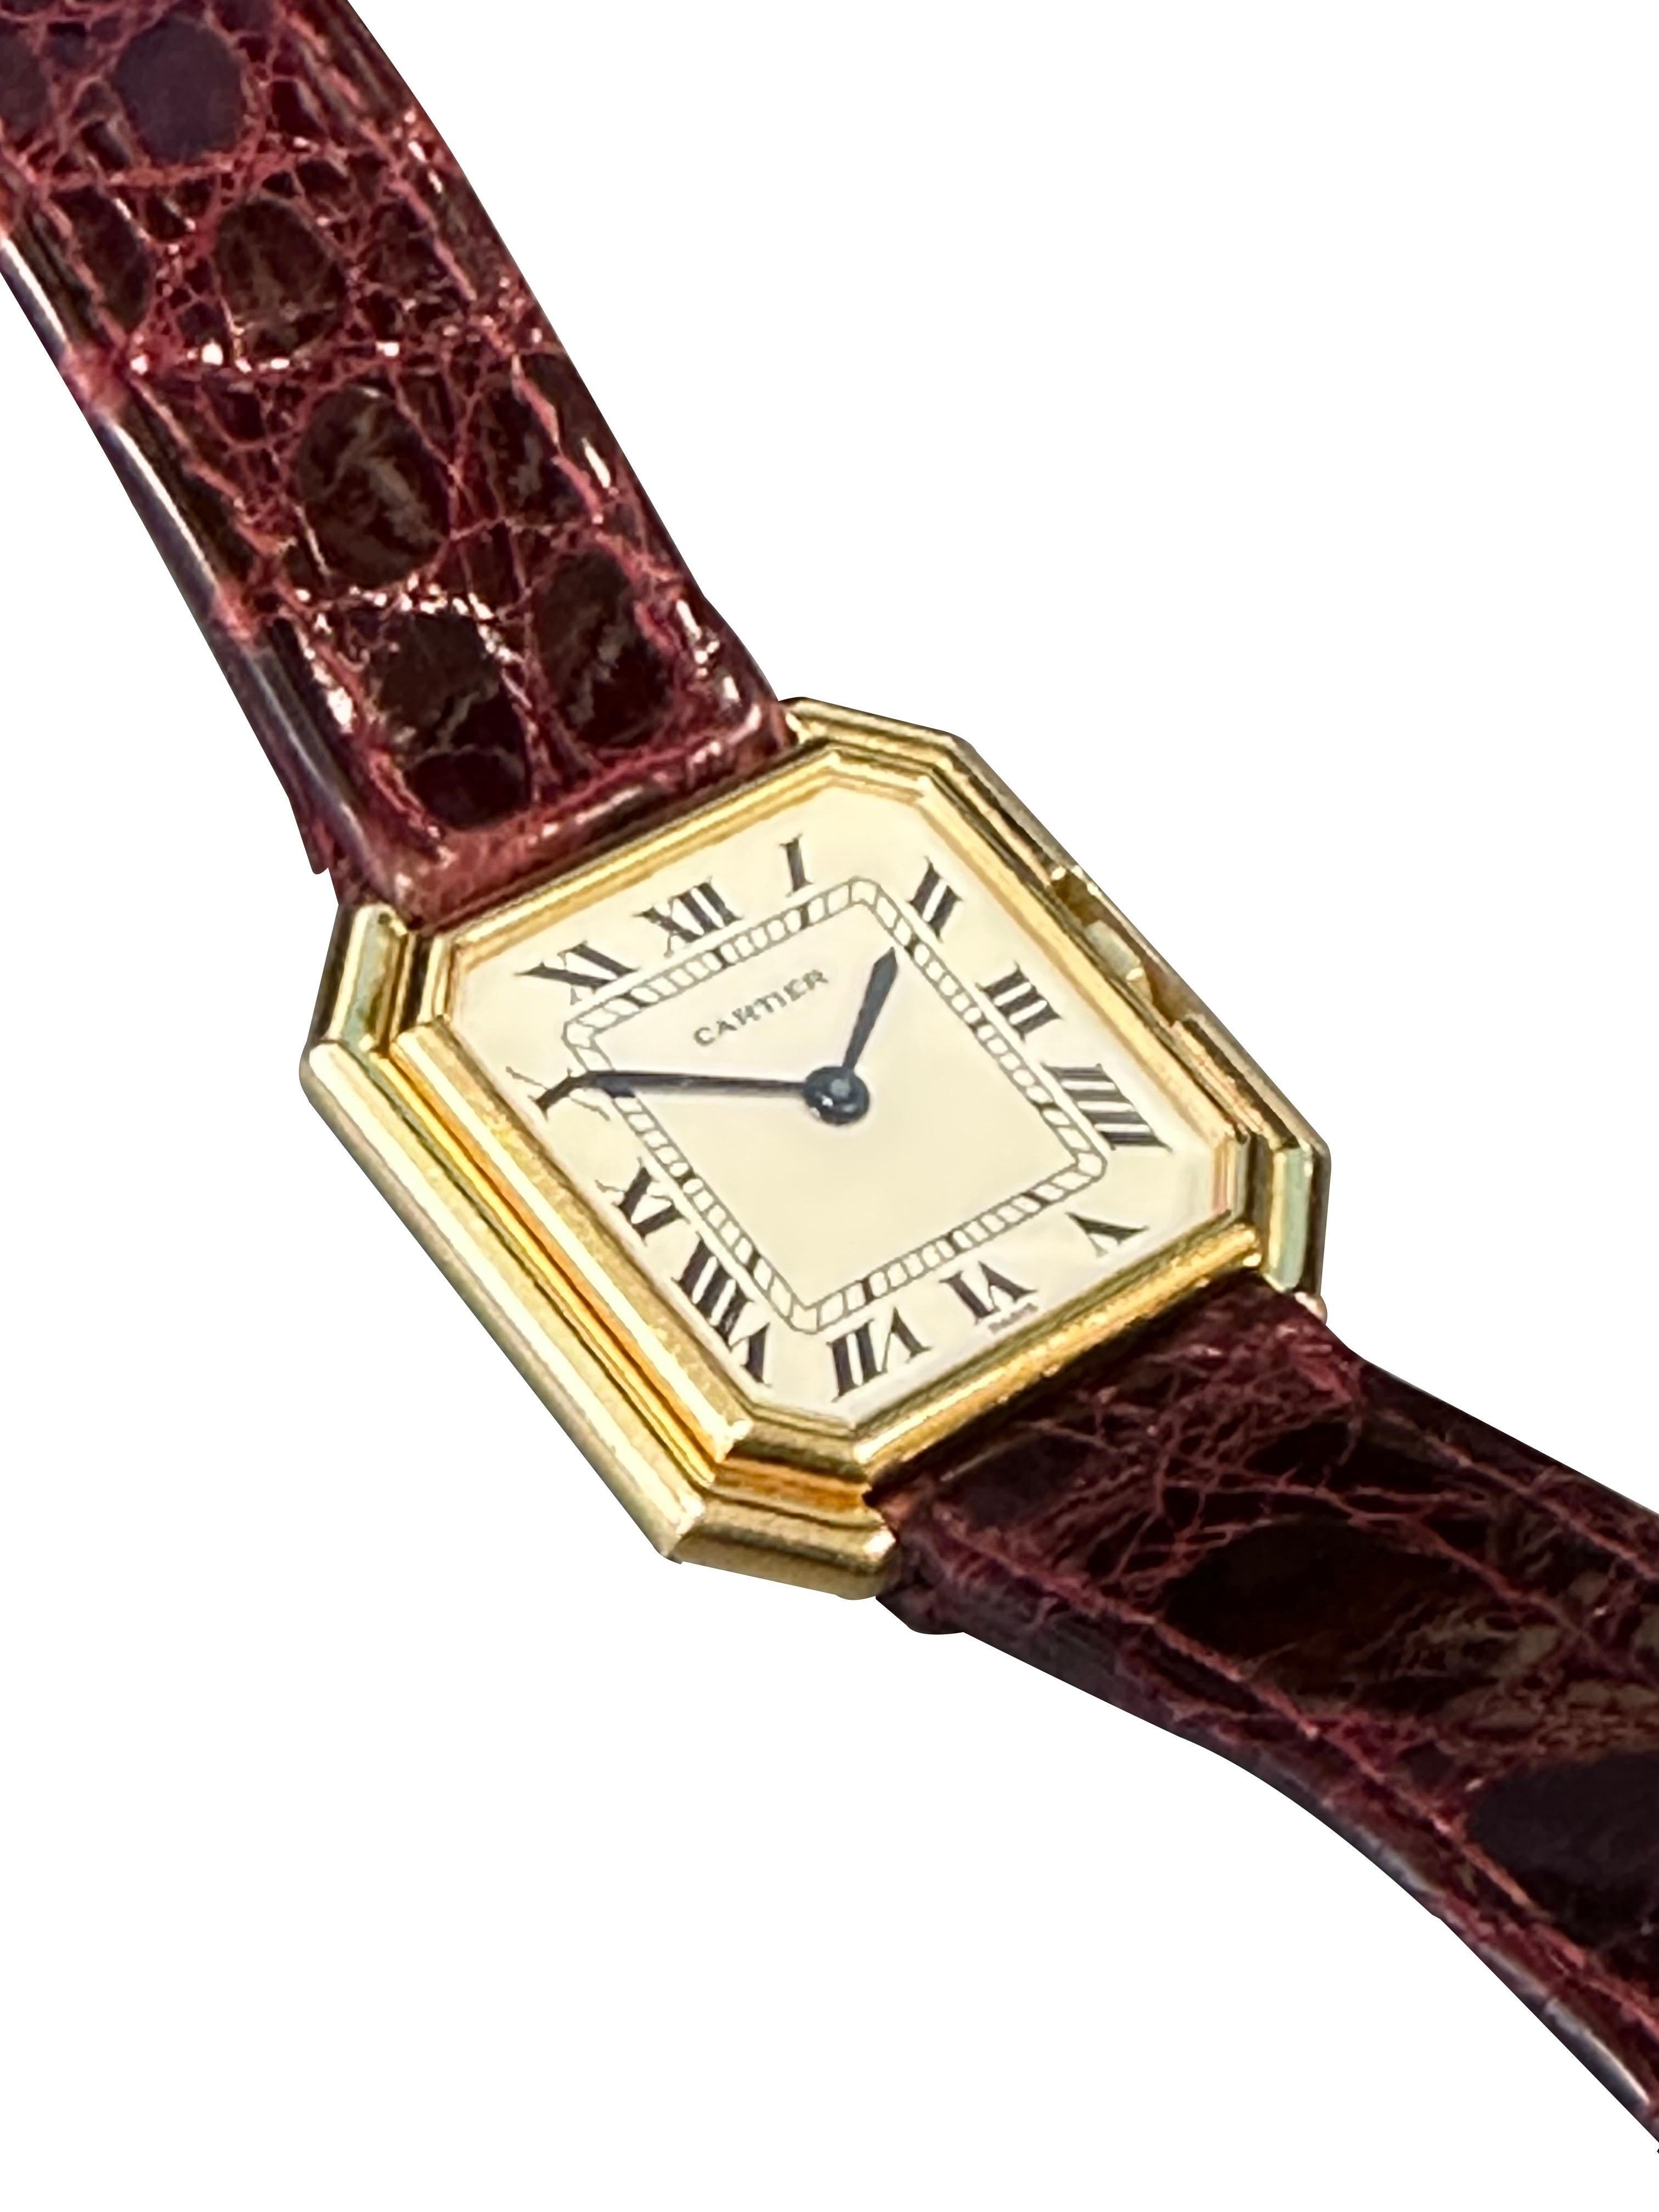 Circa 1970s Cartier Paris Centure Wrist Watch,  27 X 27 M.M. 18k Yellow Gold 3 piece stepped case. 17 Jewel Mechanical, manual wind movement, White dial with Black Roman numerals. Original Cartier Burgundy croco Strap with Cartier 18k Tang buckle,